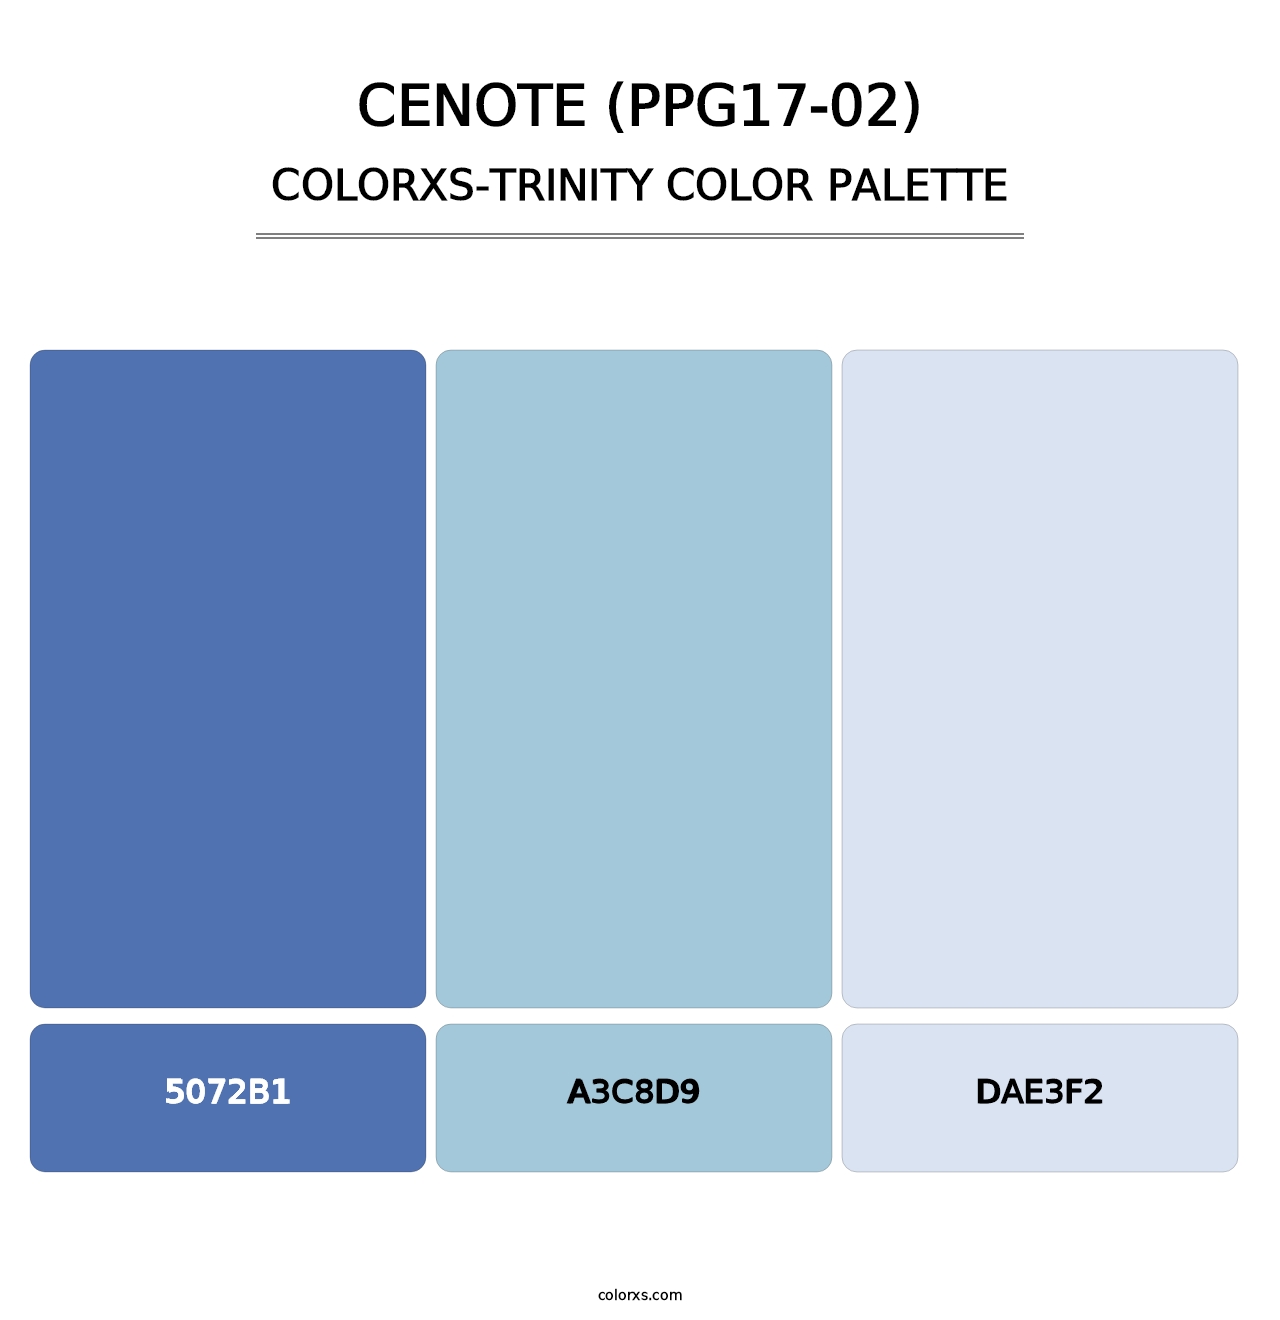 Cenote (PPG17-02) - Colorxs Trinity Palette